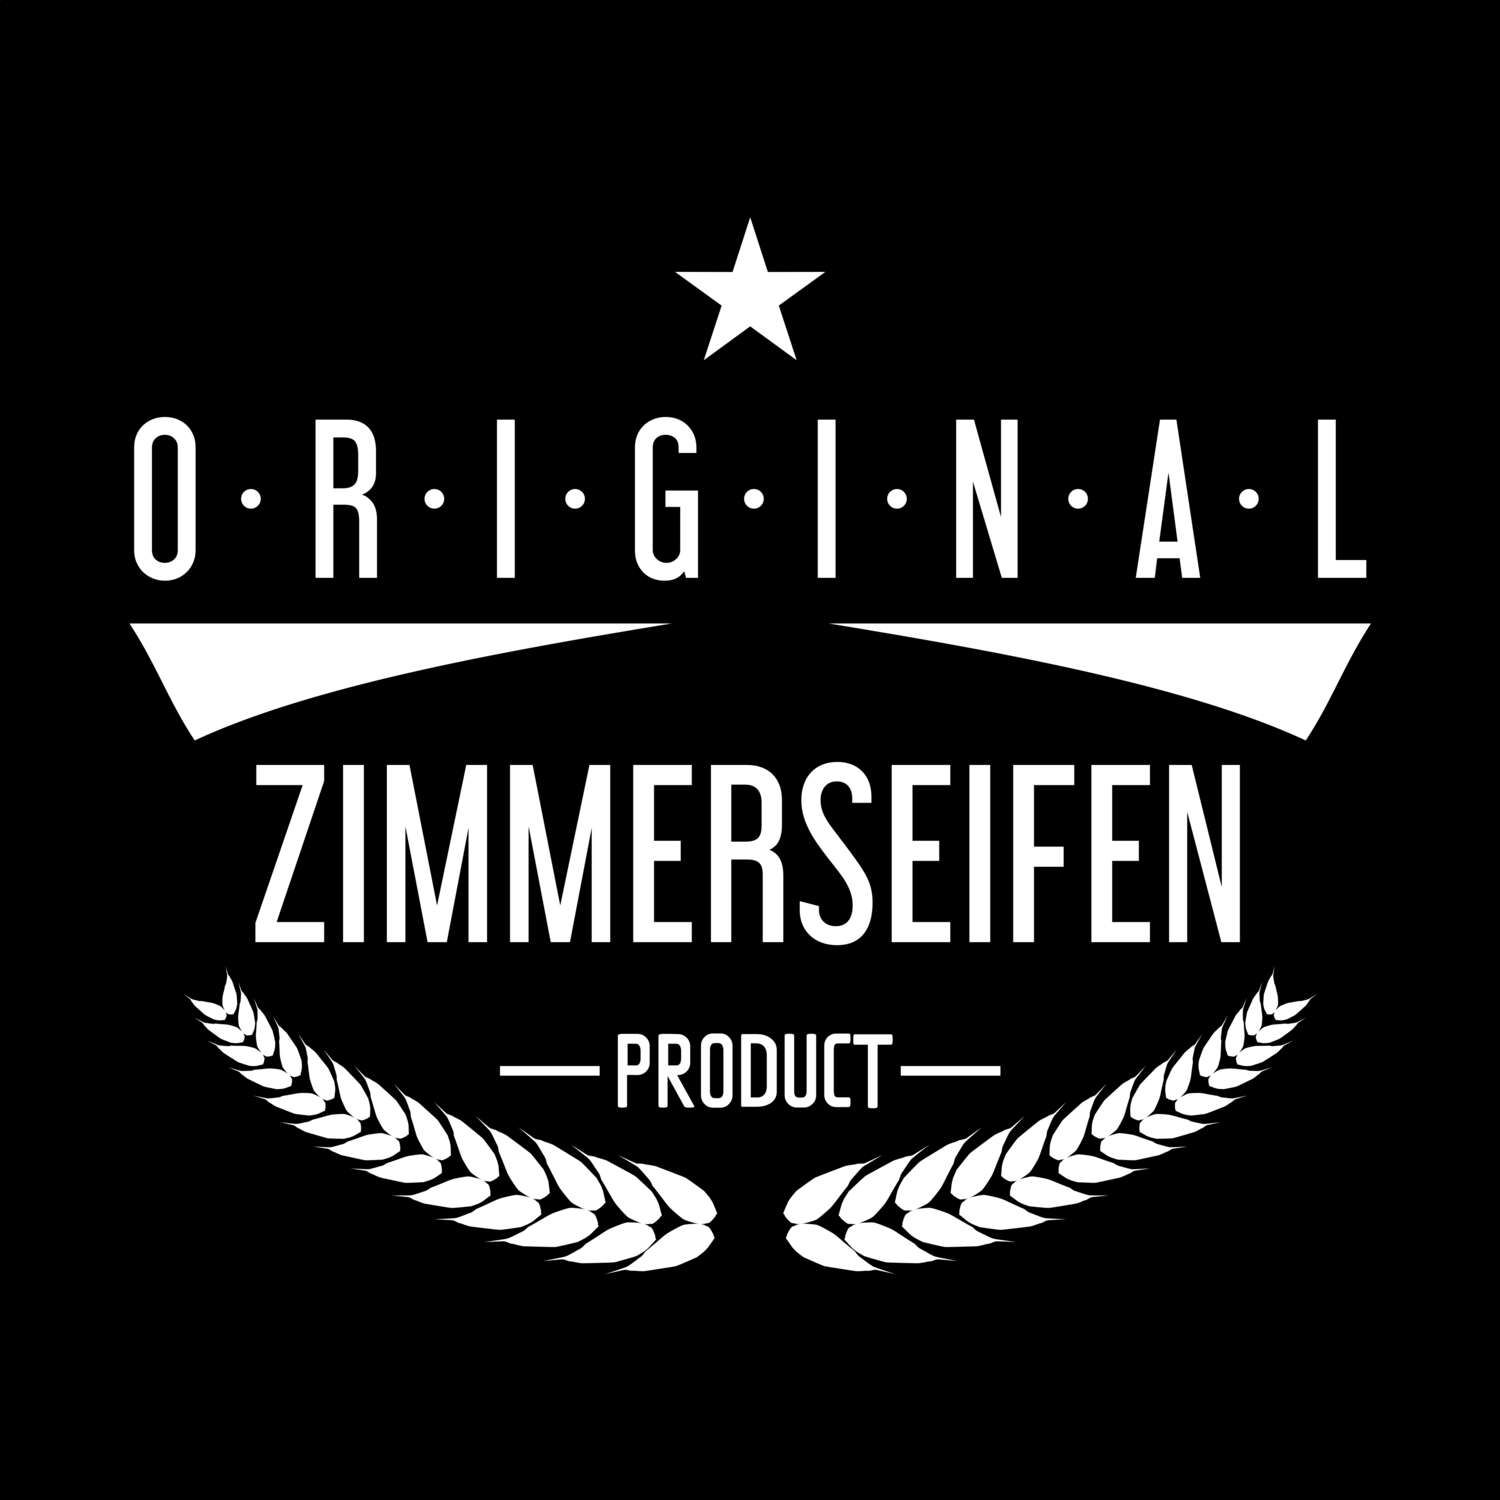 Zimmerseifen T-Shirt »Original Product«